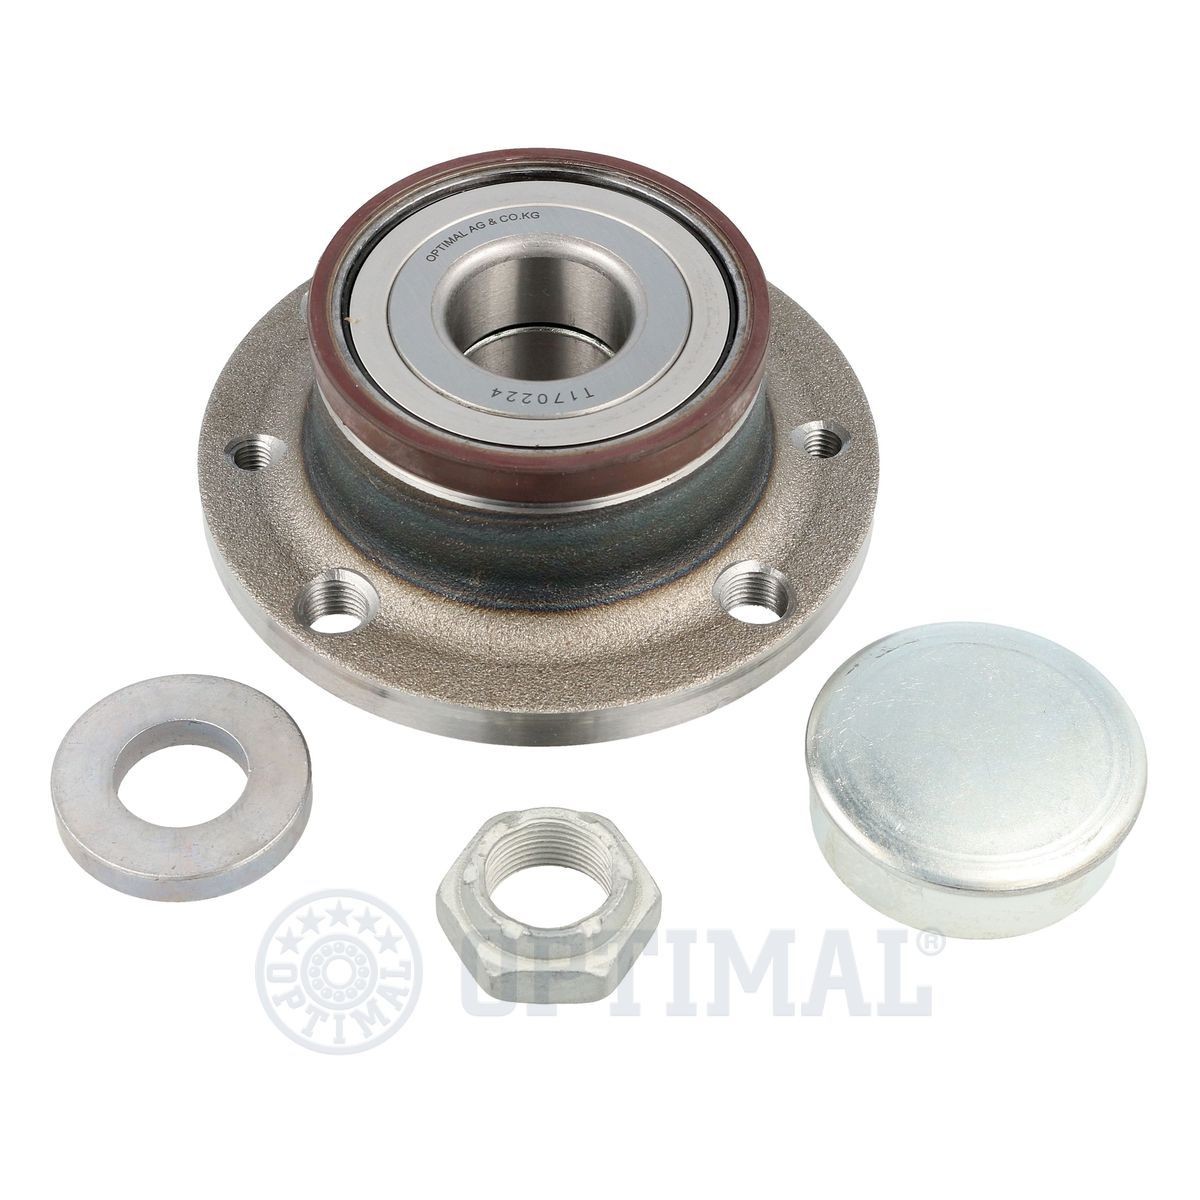 OPTIMAL 802980 Wheel bearing kit with integrated magnetic sensor ring, 117 mm